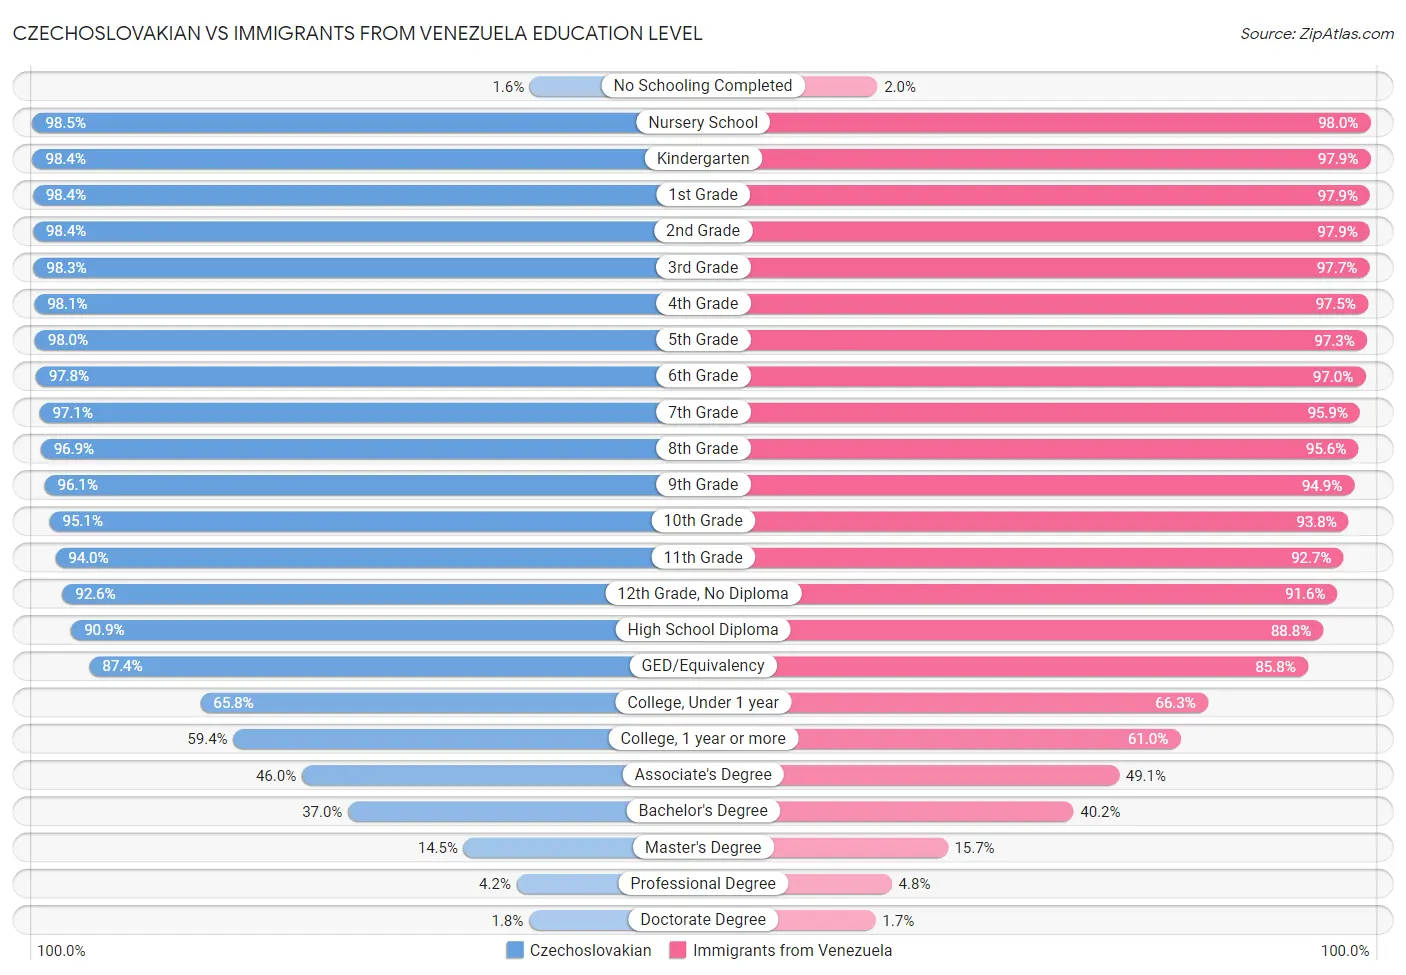 Czechoslovakian vs Immigrants from Venezuela Education Level